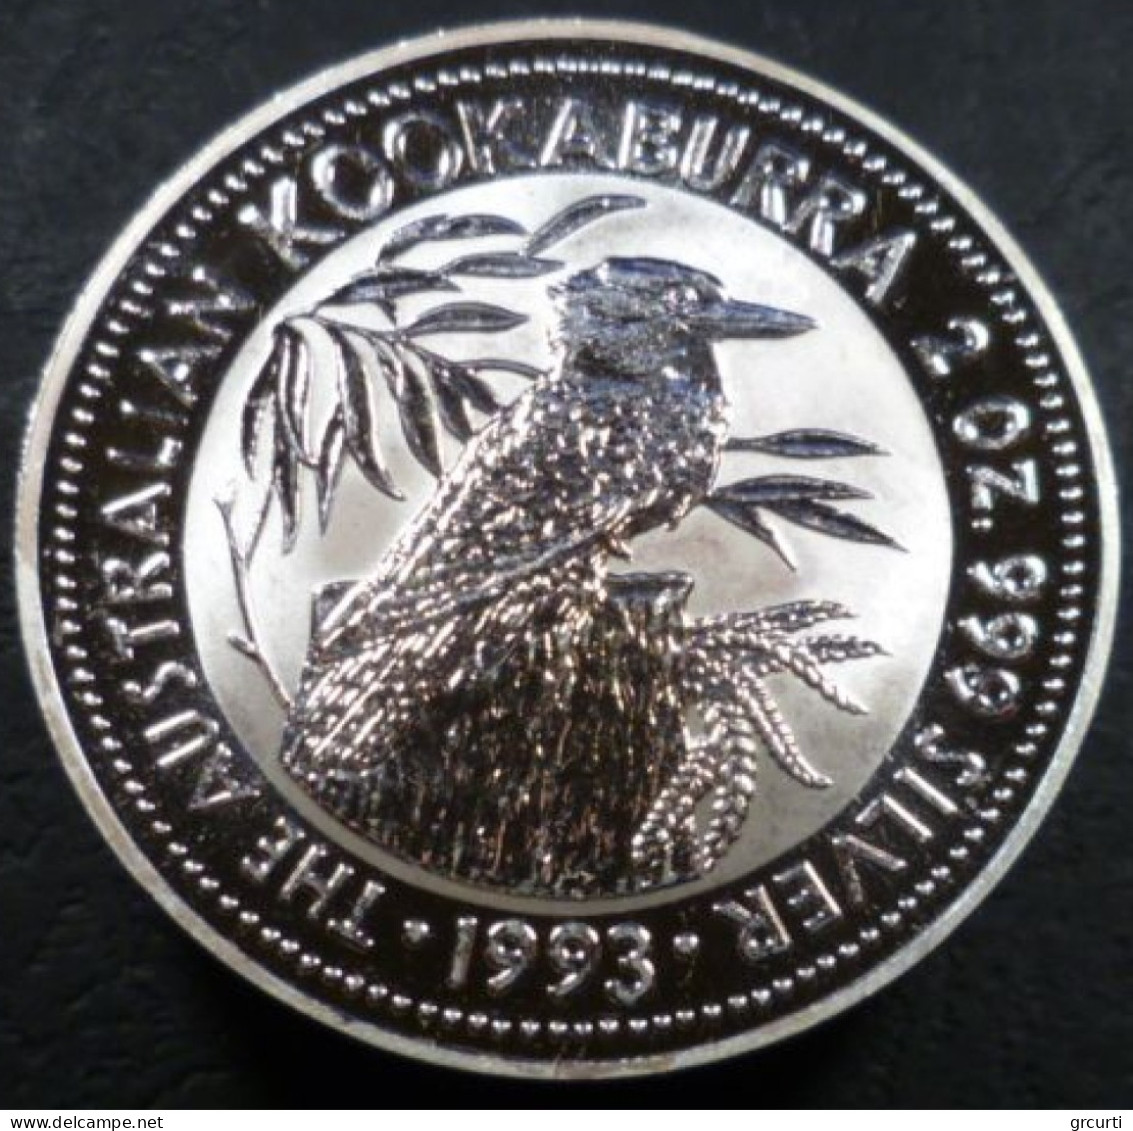 Australia - 2 Dollari 1993 - Kookaburra - KM# 179 - Silver Bullions